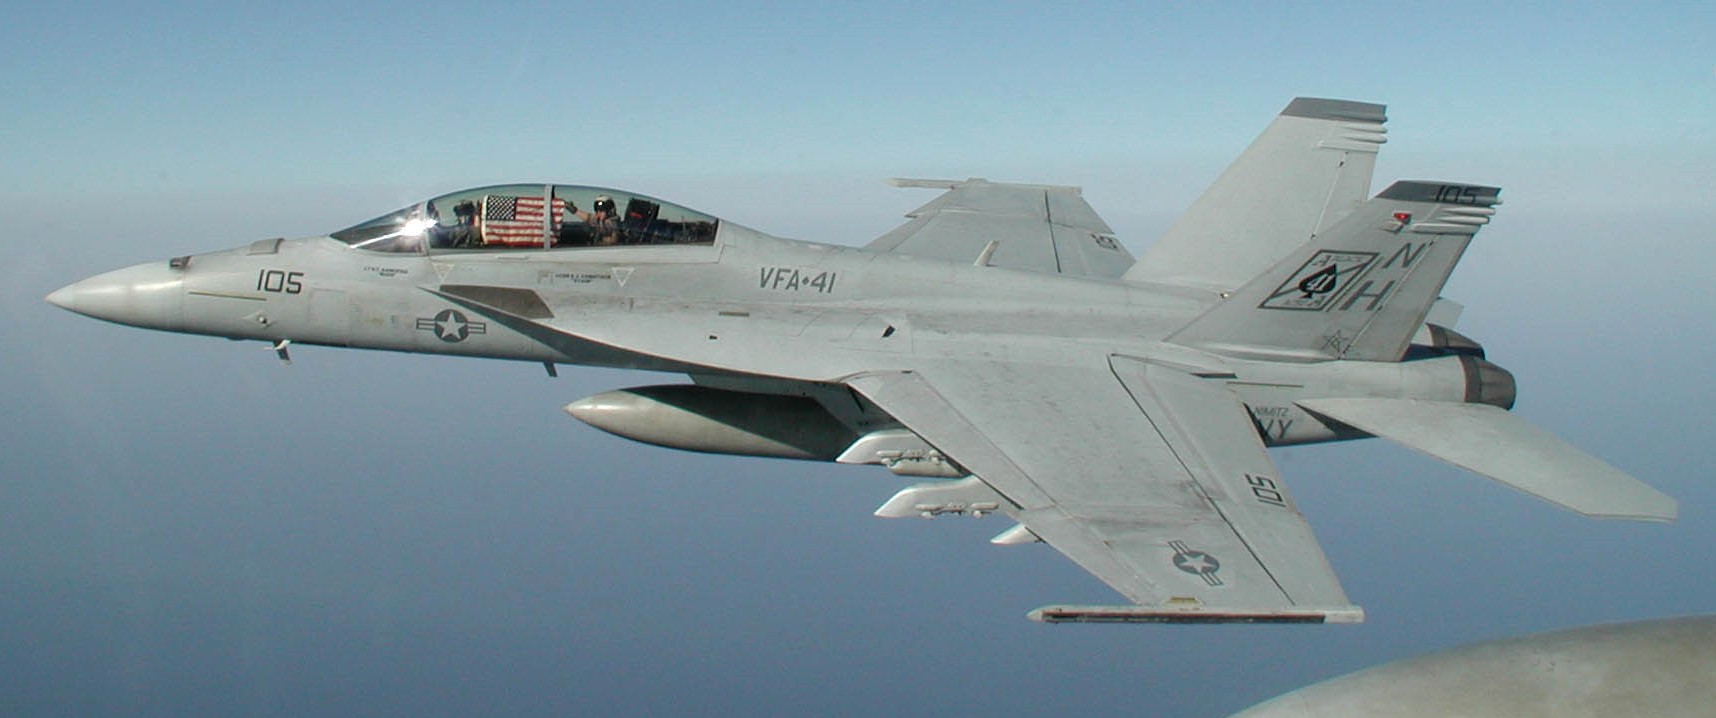 vfa-41 black aces strike fighter squadron f/a-18f super hornet cvw-11 cvn-68 uss nimitz us navy 182p